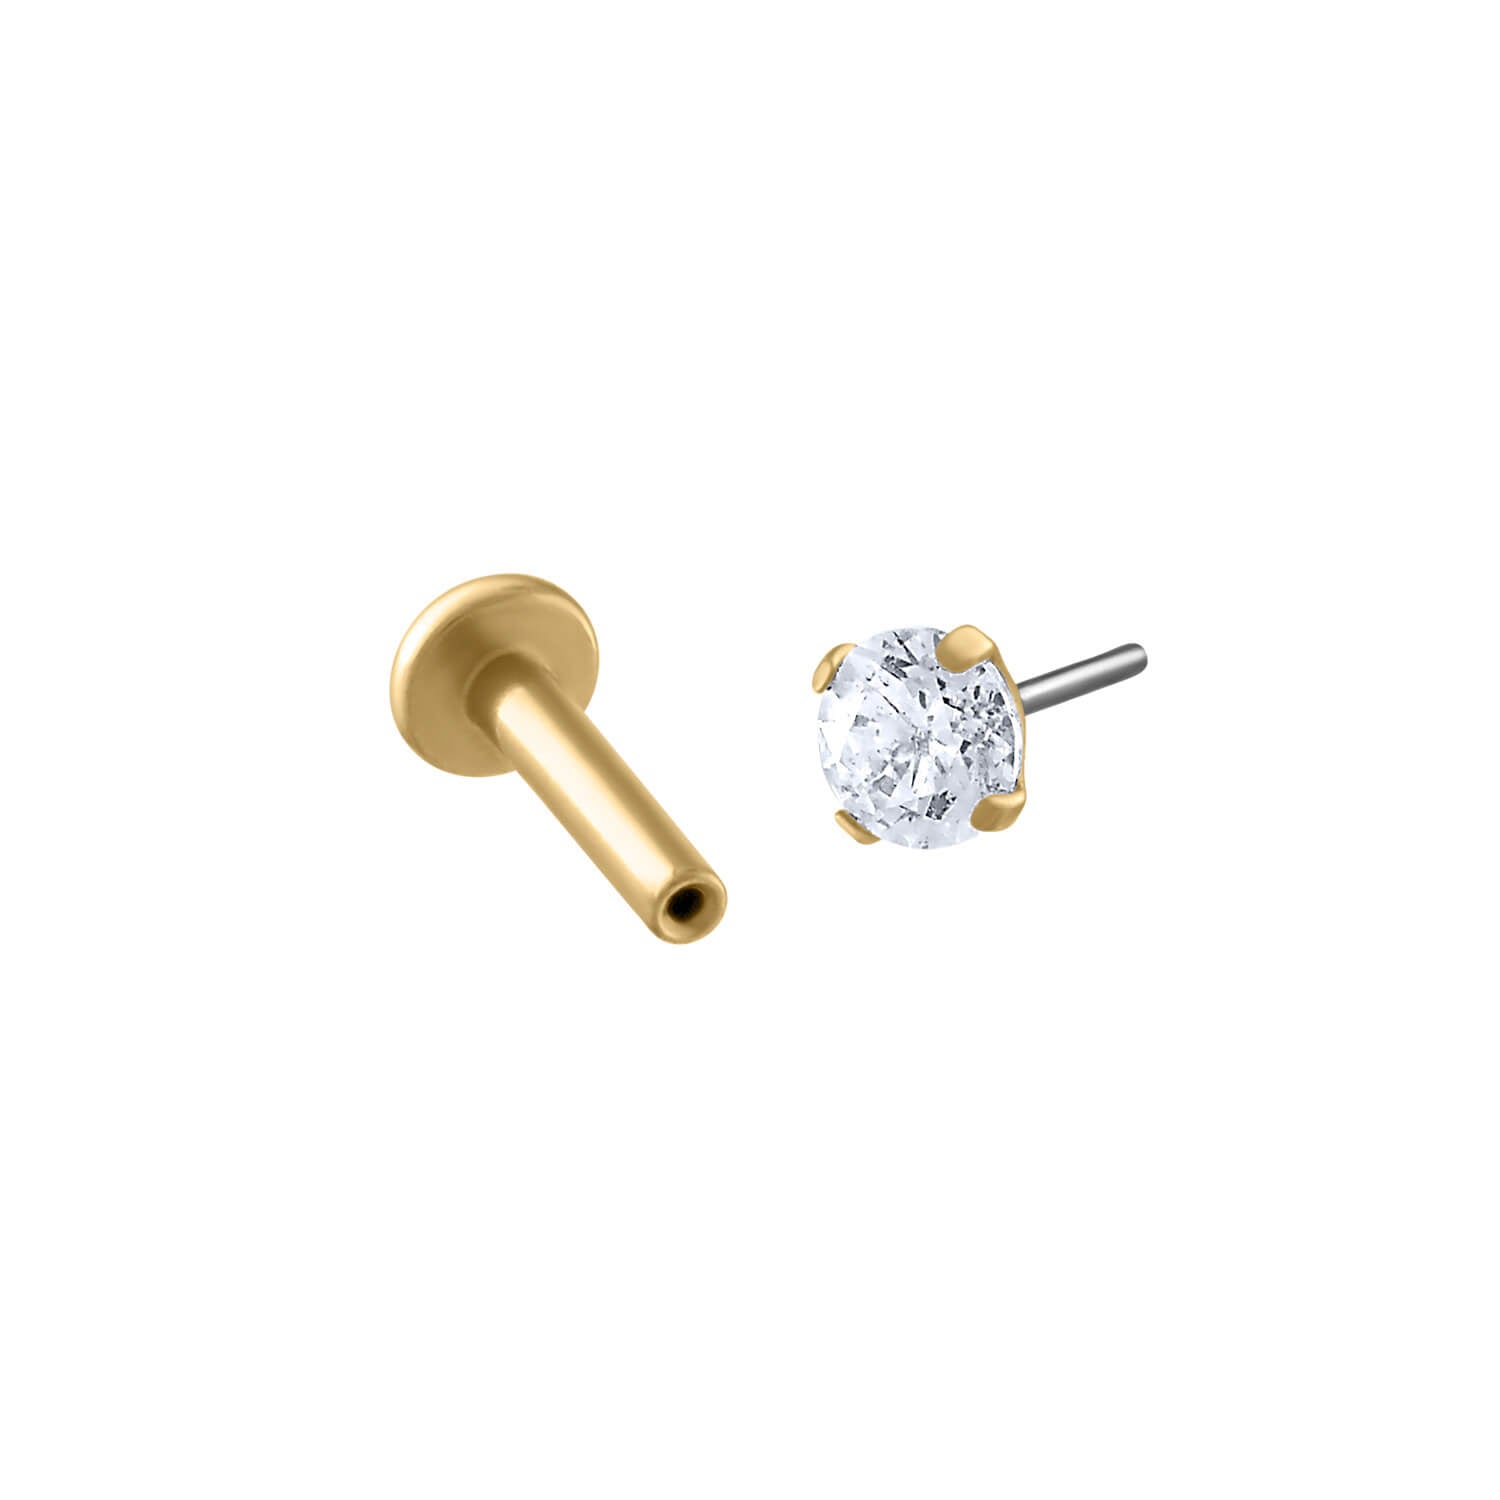 Pave Lightning Threaded Flat Back Earring, Titanium - Gold / 18g: Healed Cartilage Piercings / 6mm at Maison Miru